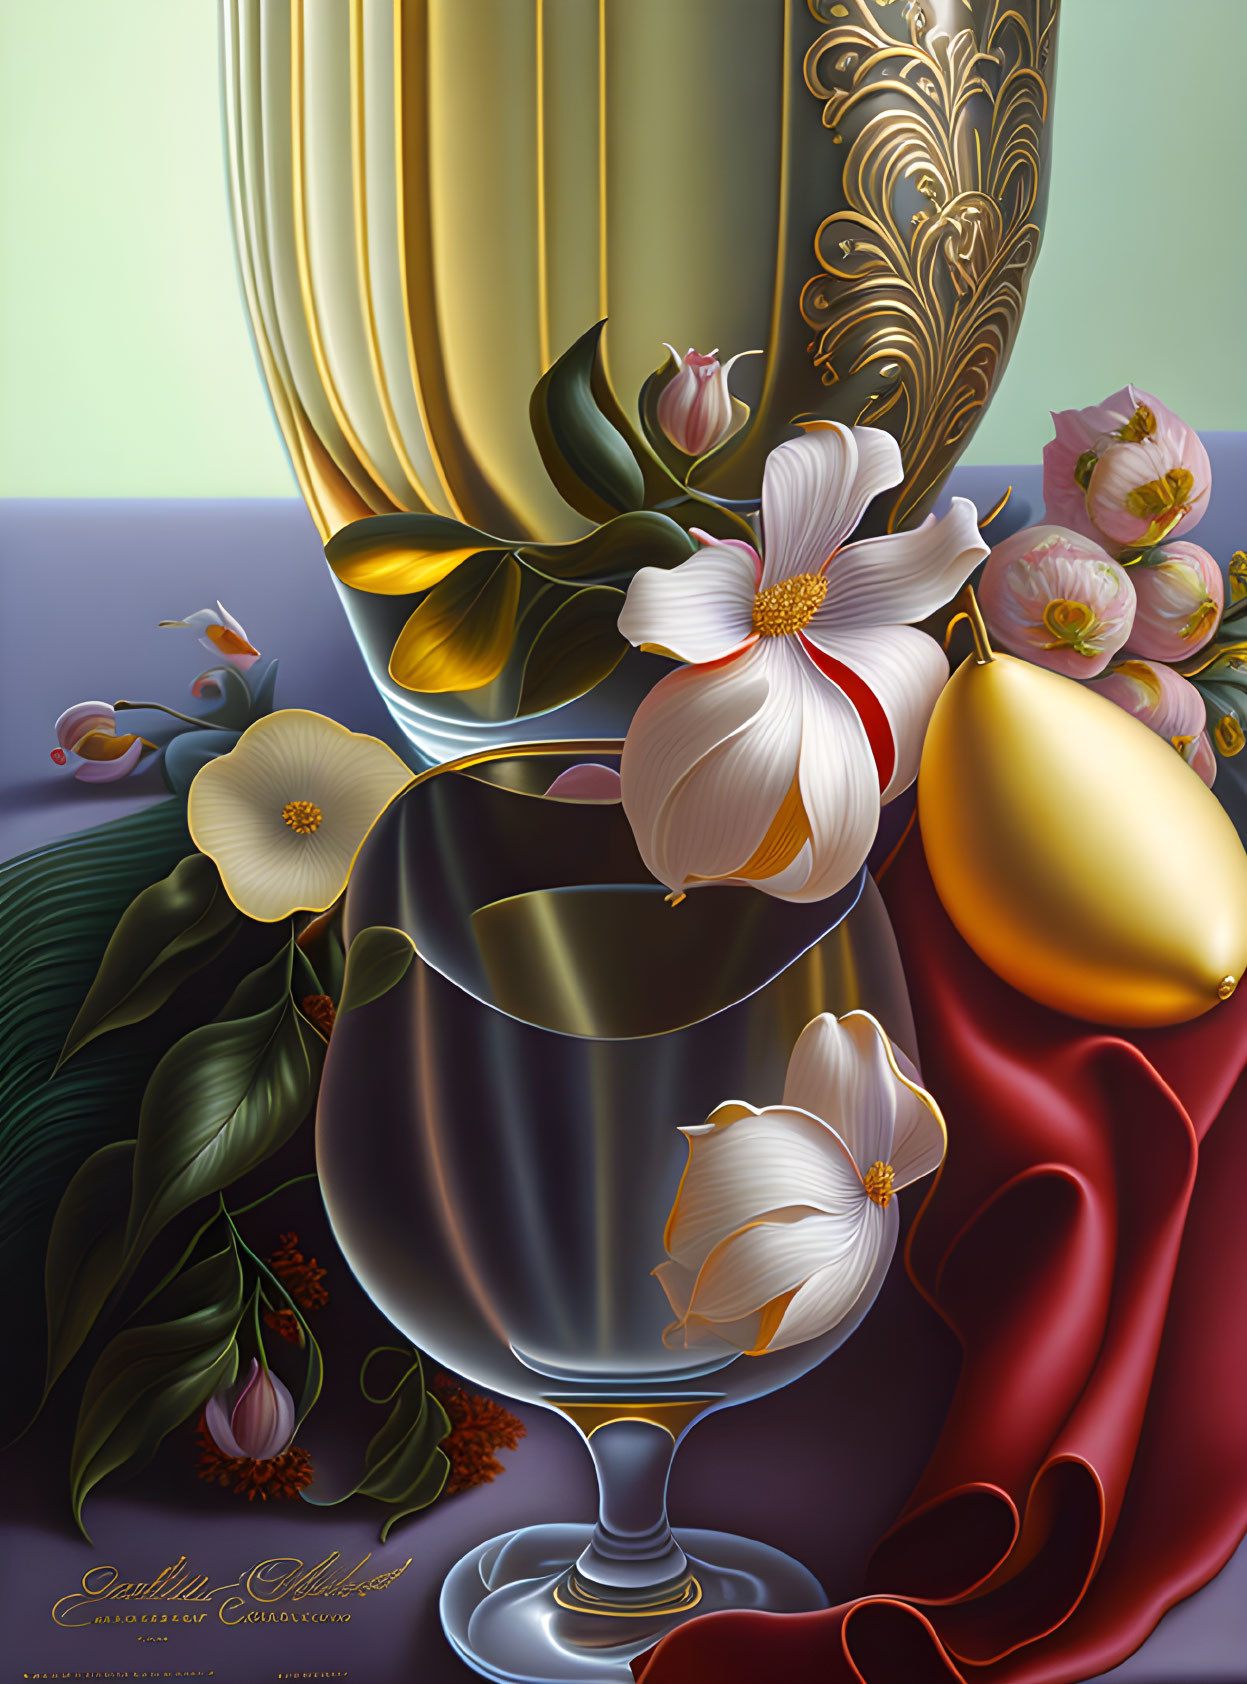 Elegant still life digital artwork with wine glass, flowers, velvet cloth, and ornate mirror